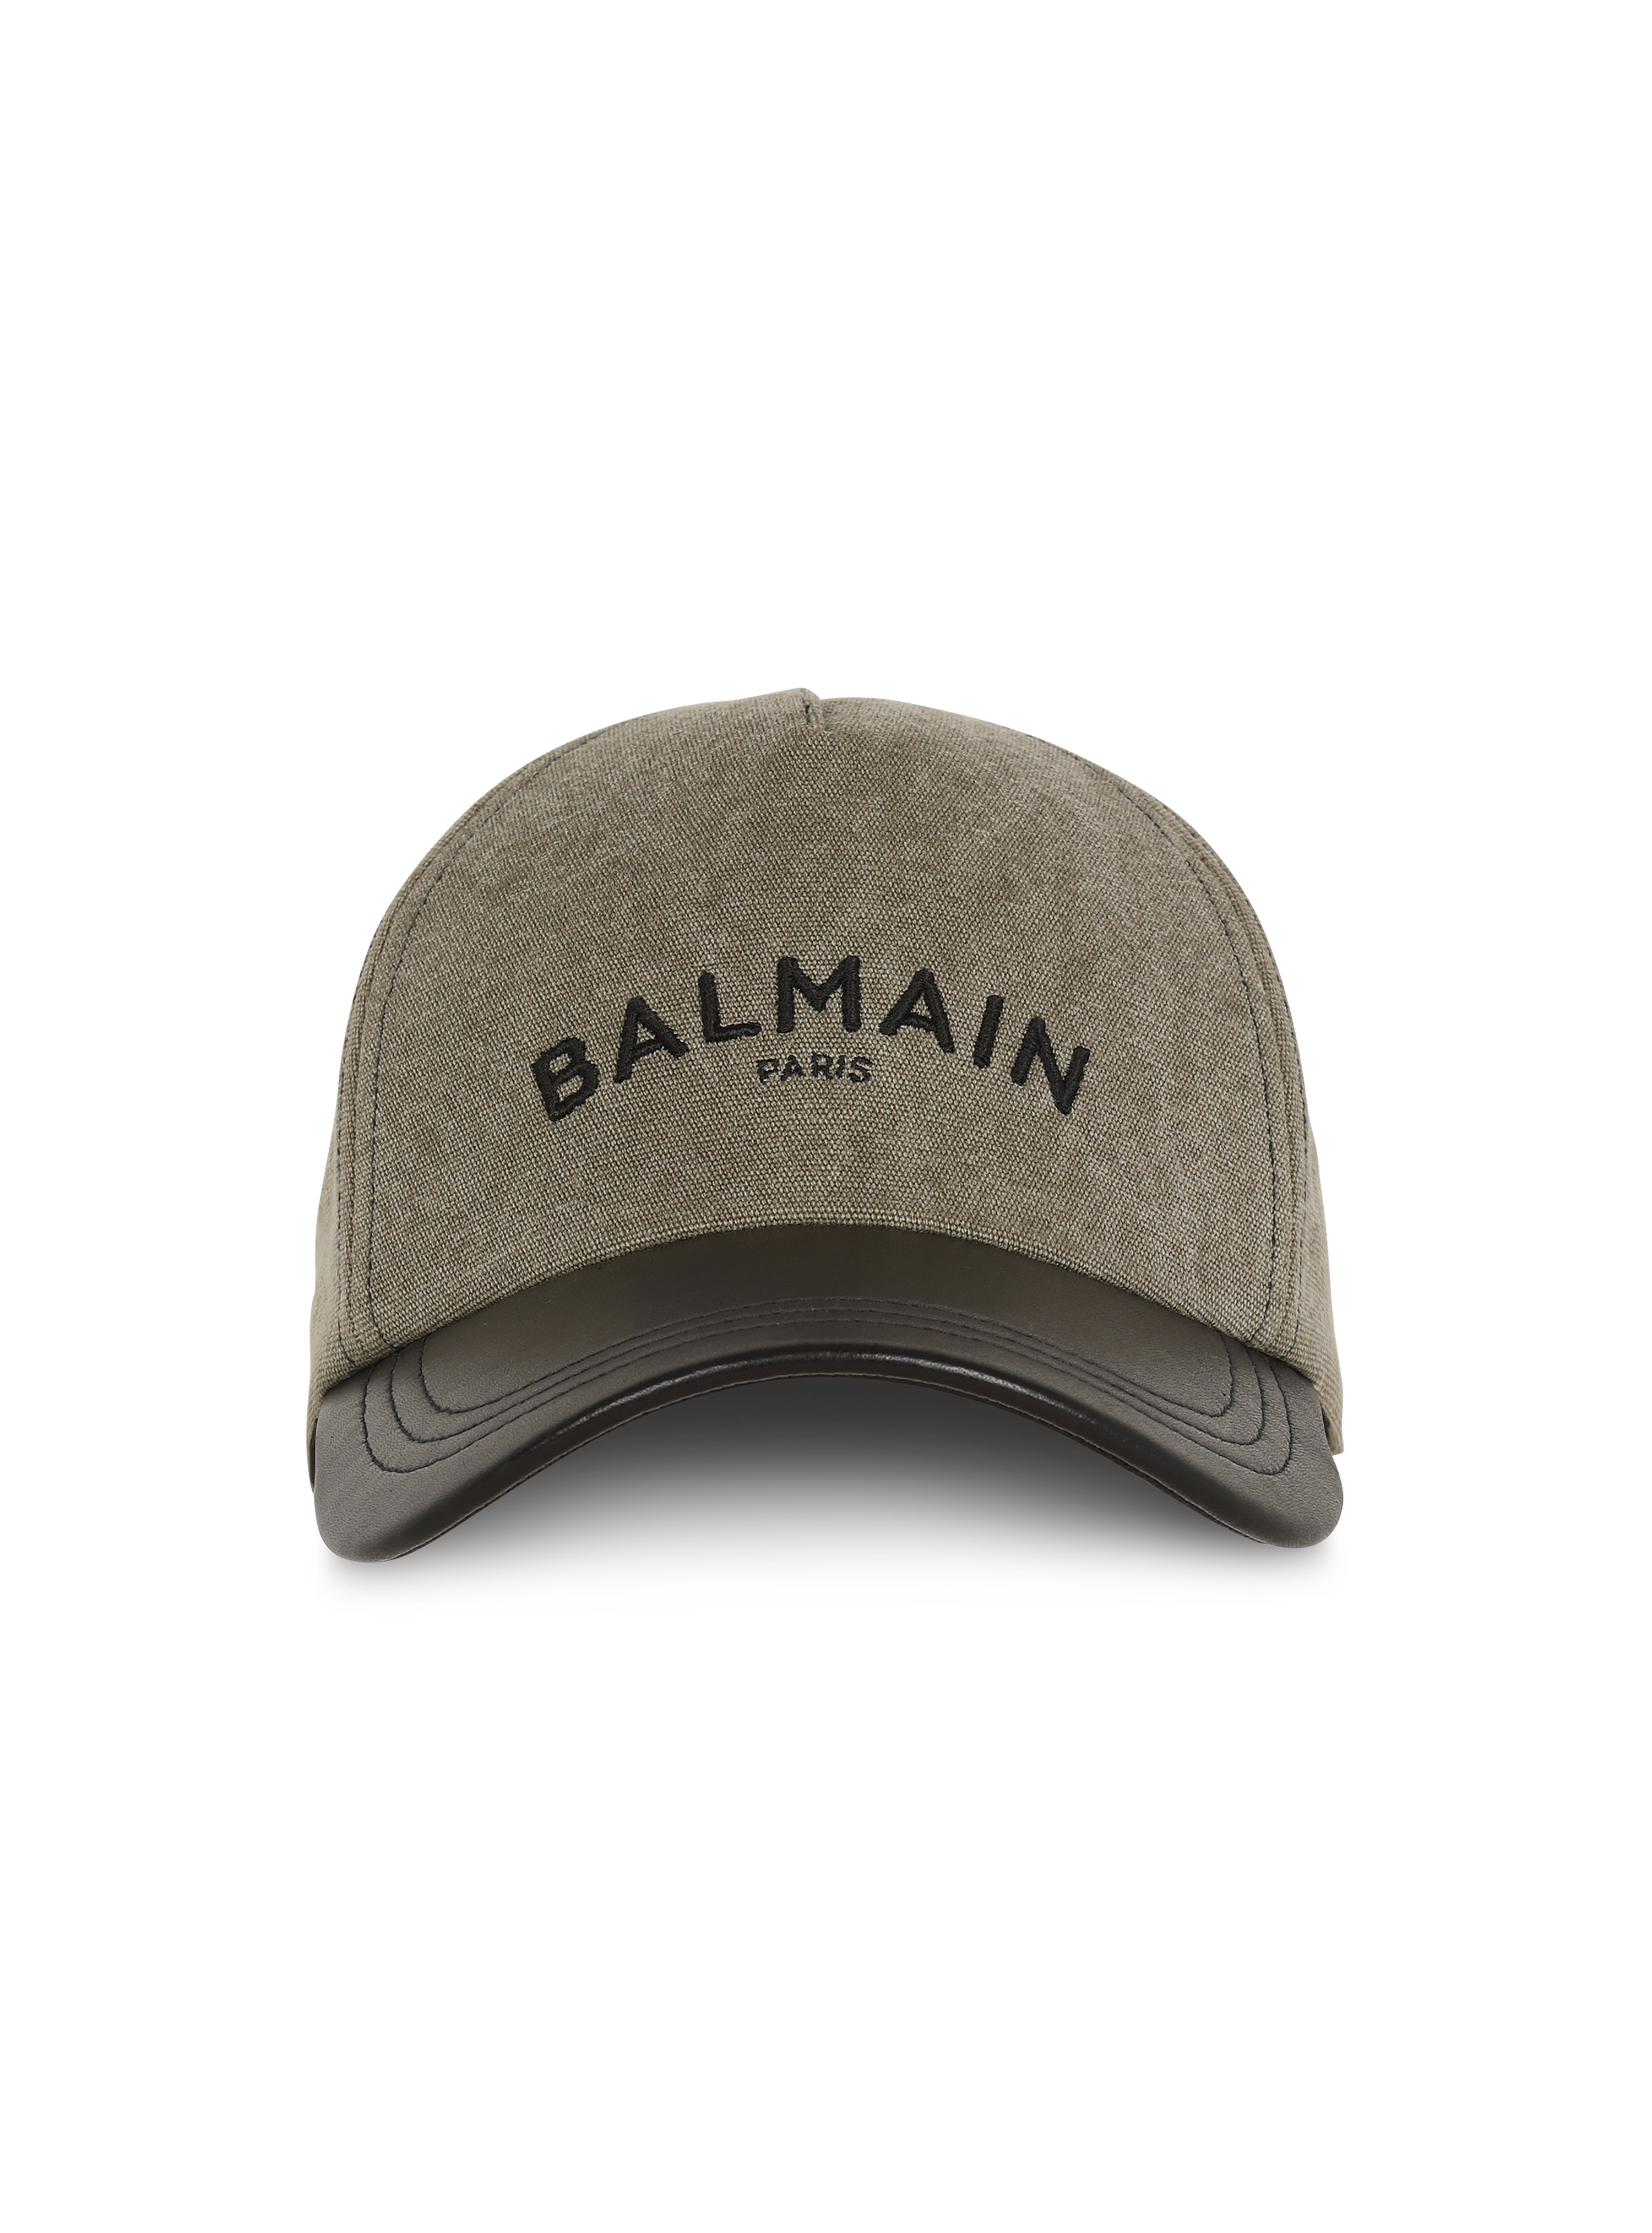 Cotton cap with Balmain logo, khaki